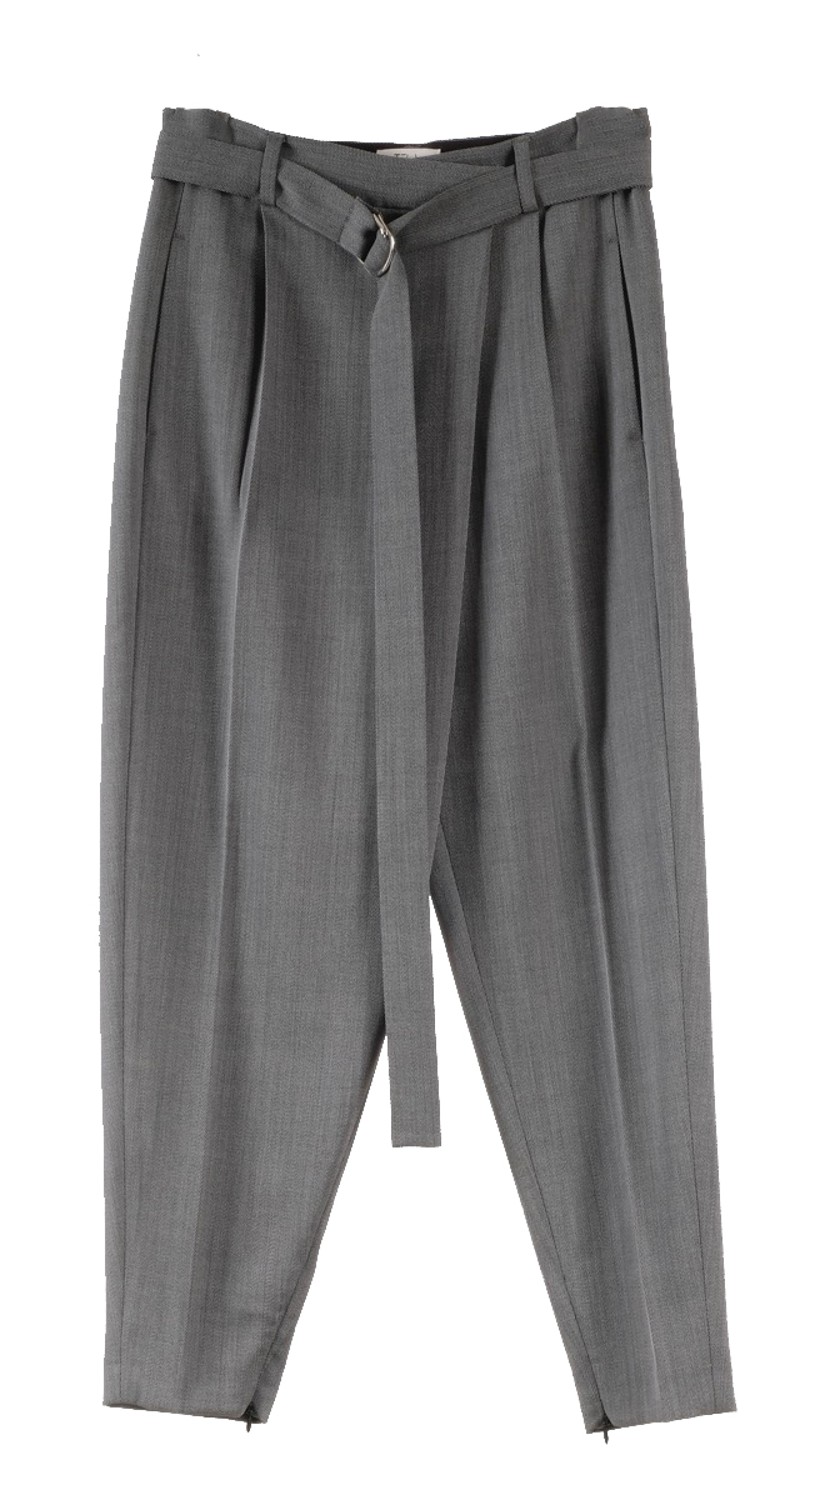 shop Tela Saldi Pantaloni: Pantaloni Tela, vita alta, cintura in vita, pence davanti, stretto infondo, tasche laterali.

Composizione: 100%  lana. number 1930